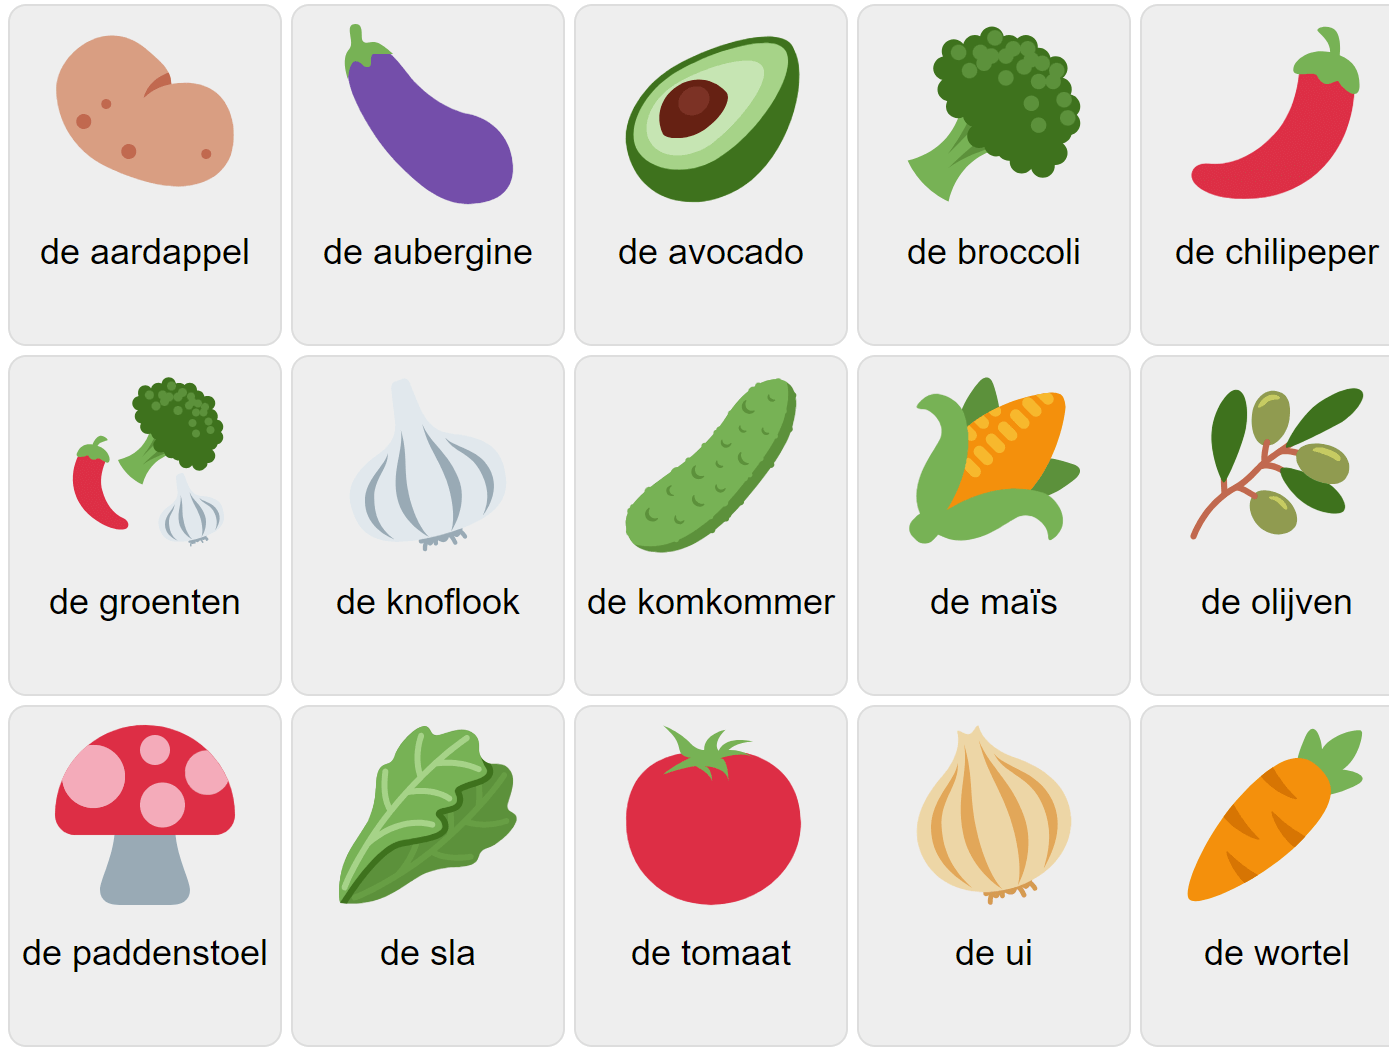 Vegetables in Dutch